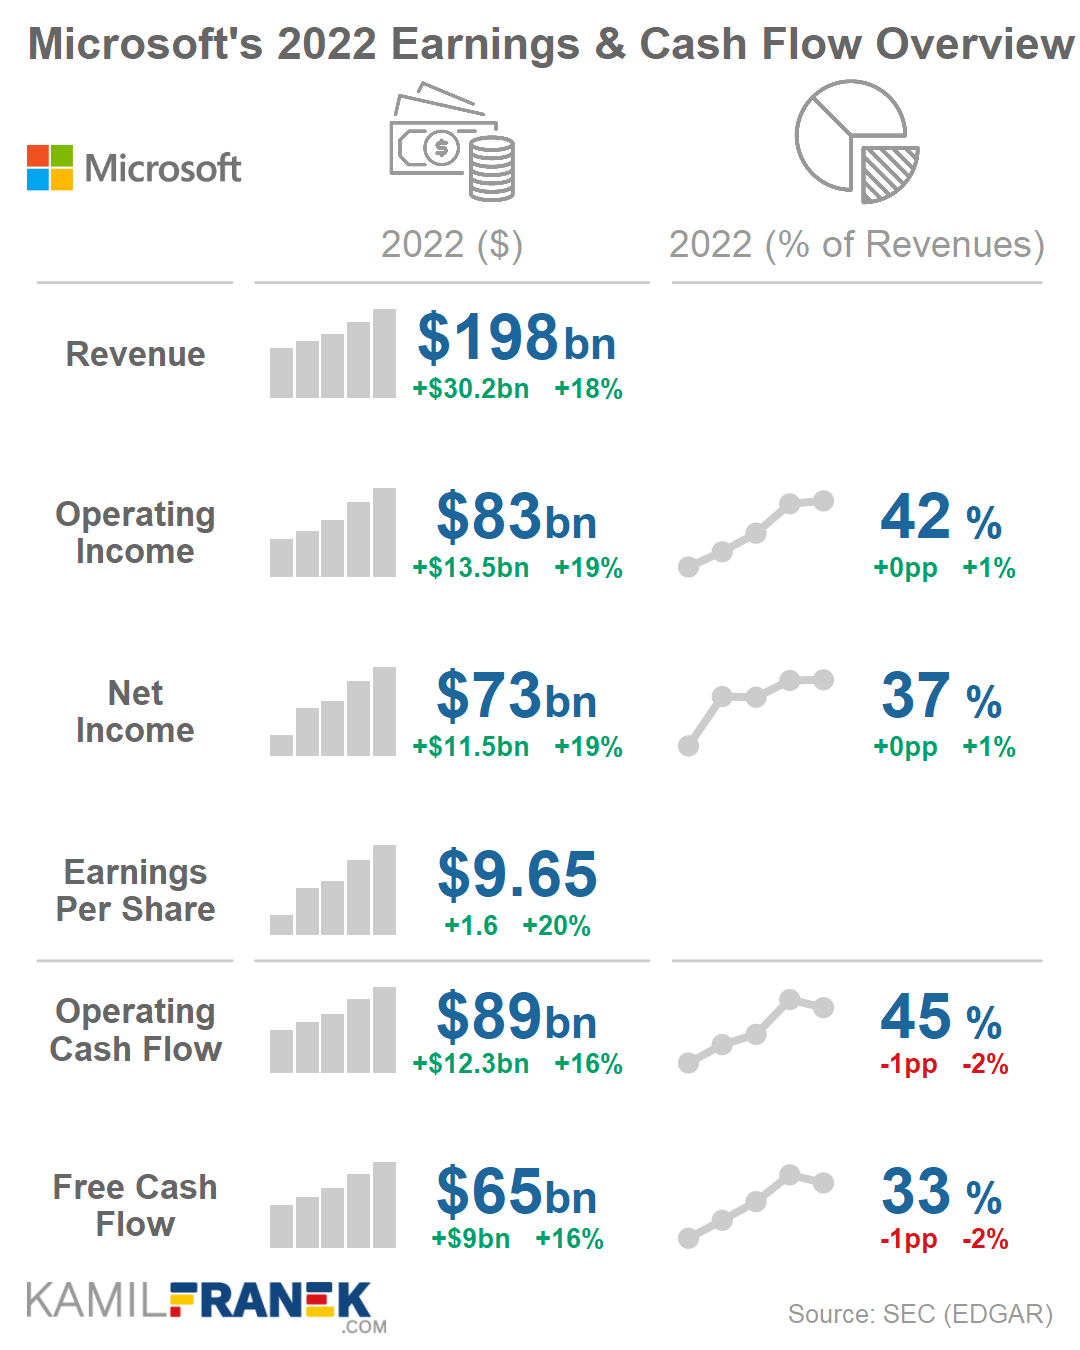 Microsoft's key income statement and cashflow metrics summary